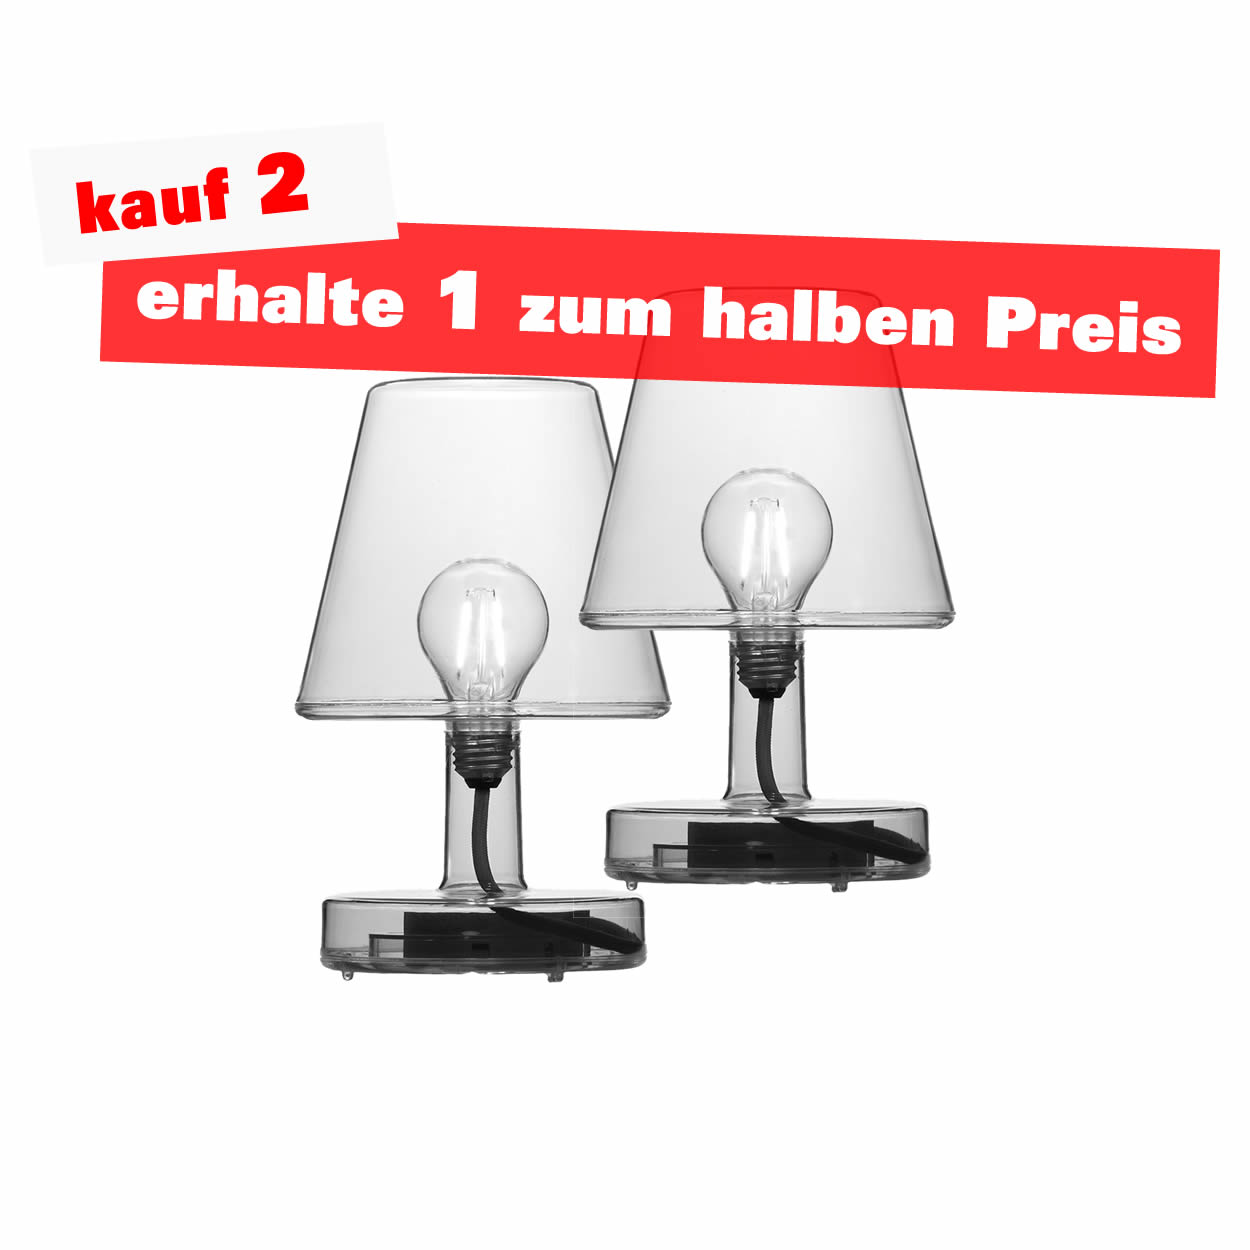 vertrekken beest Afsnijden Fatboy Transloetje LED Leuchte Duo Pack | Drifte Onlineshop